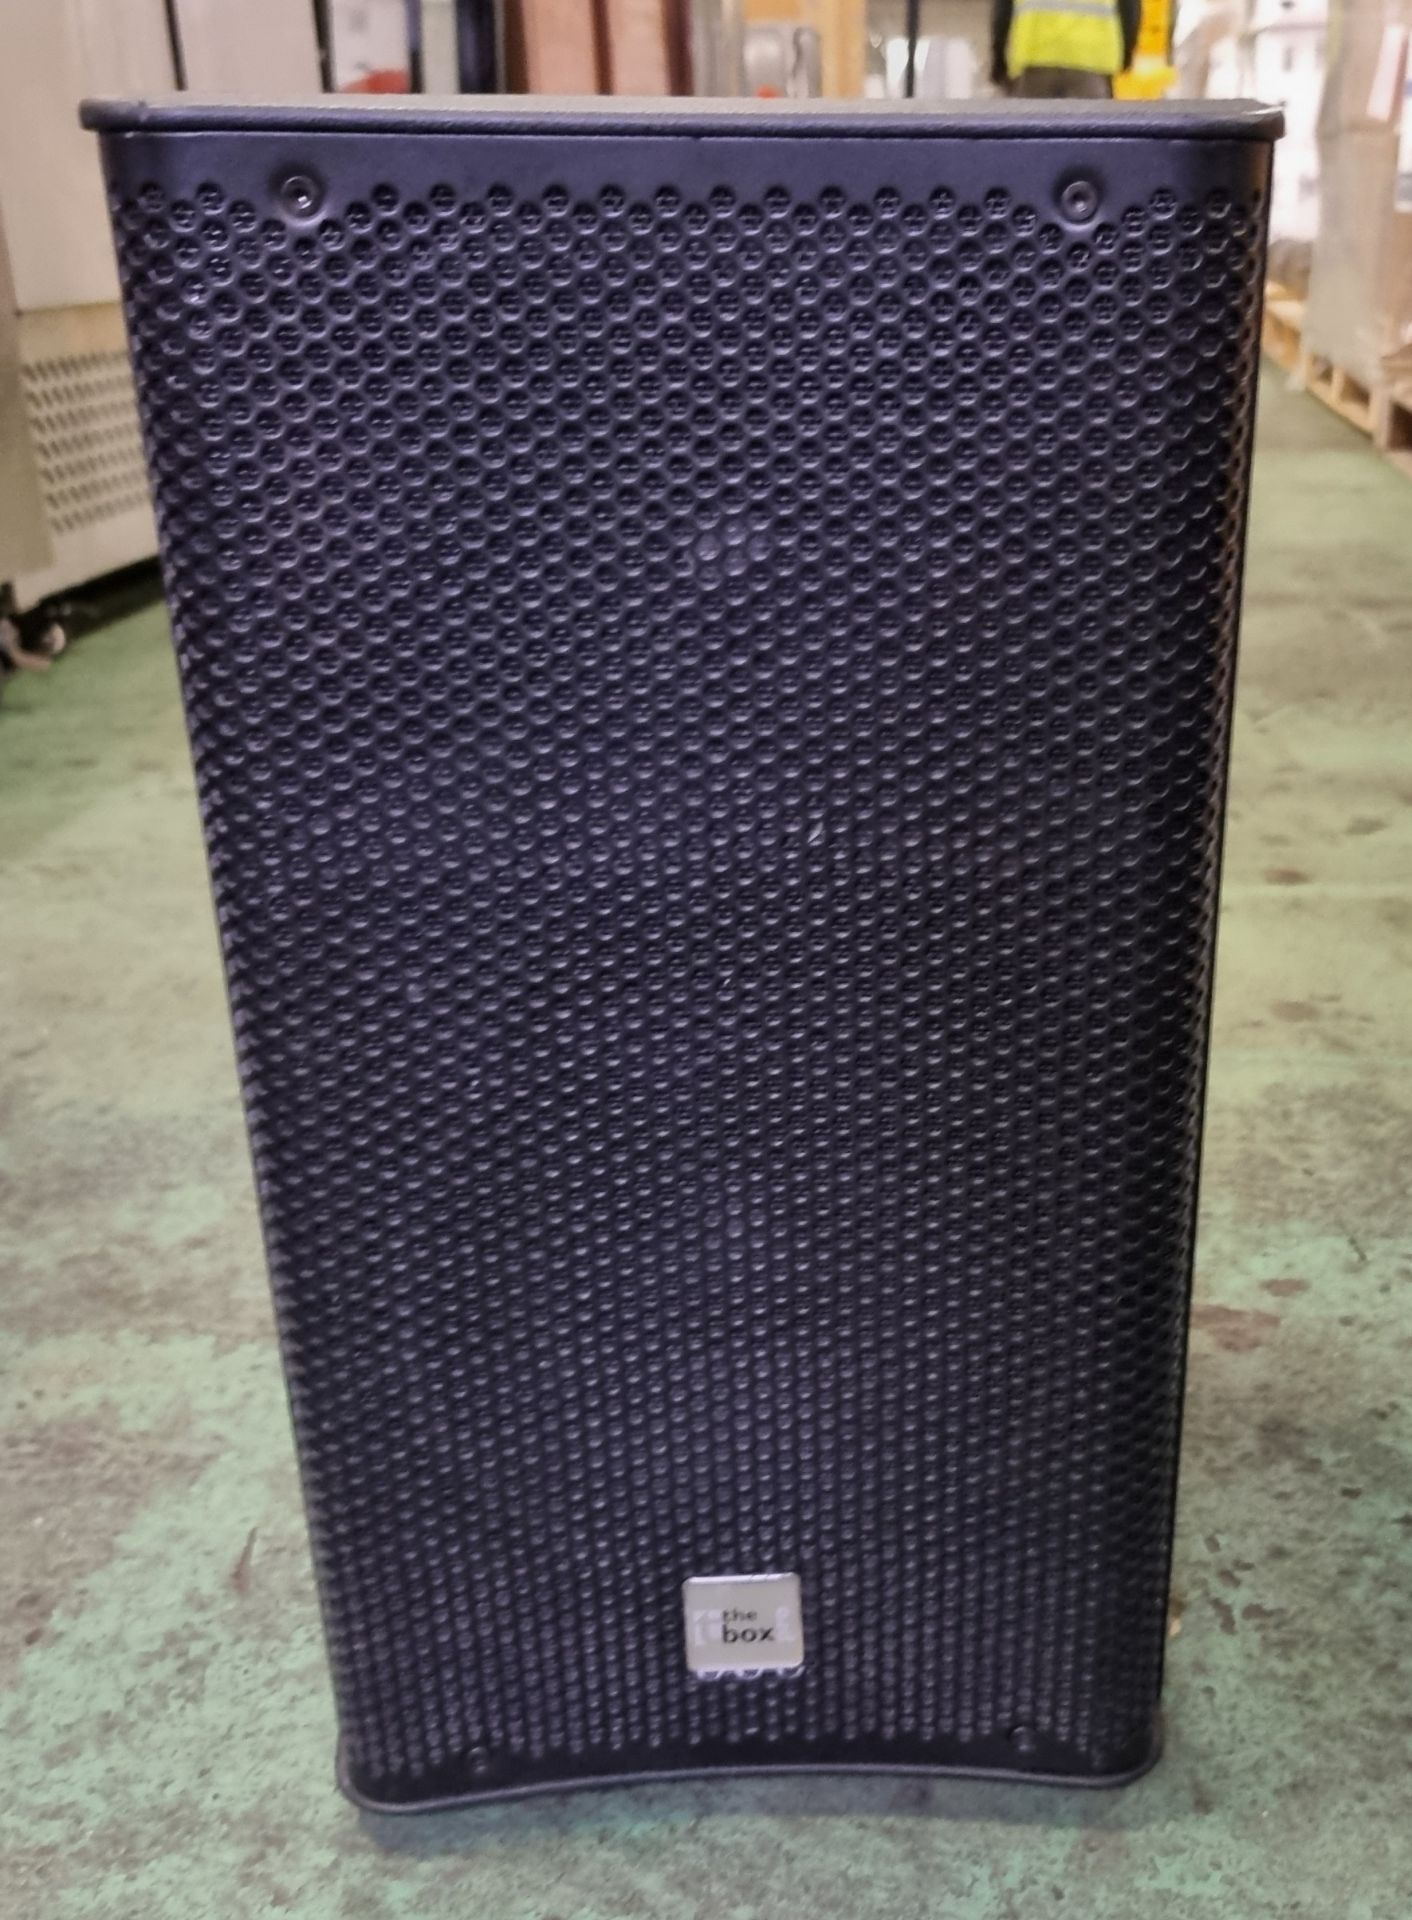 Thoman Music the box pro DSP 108 active full range speaker